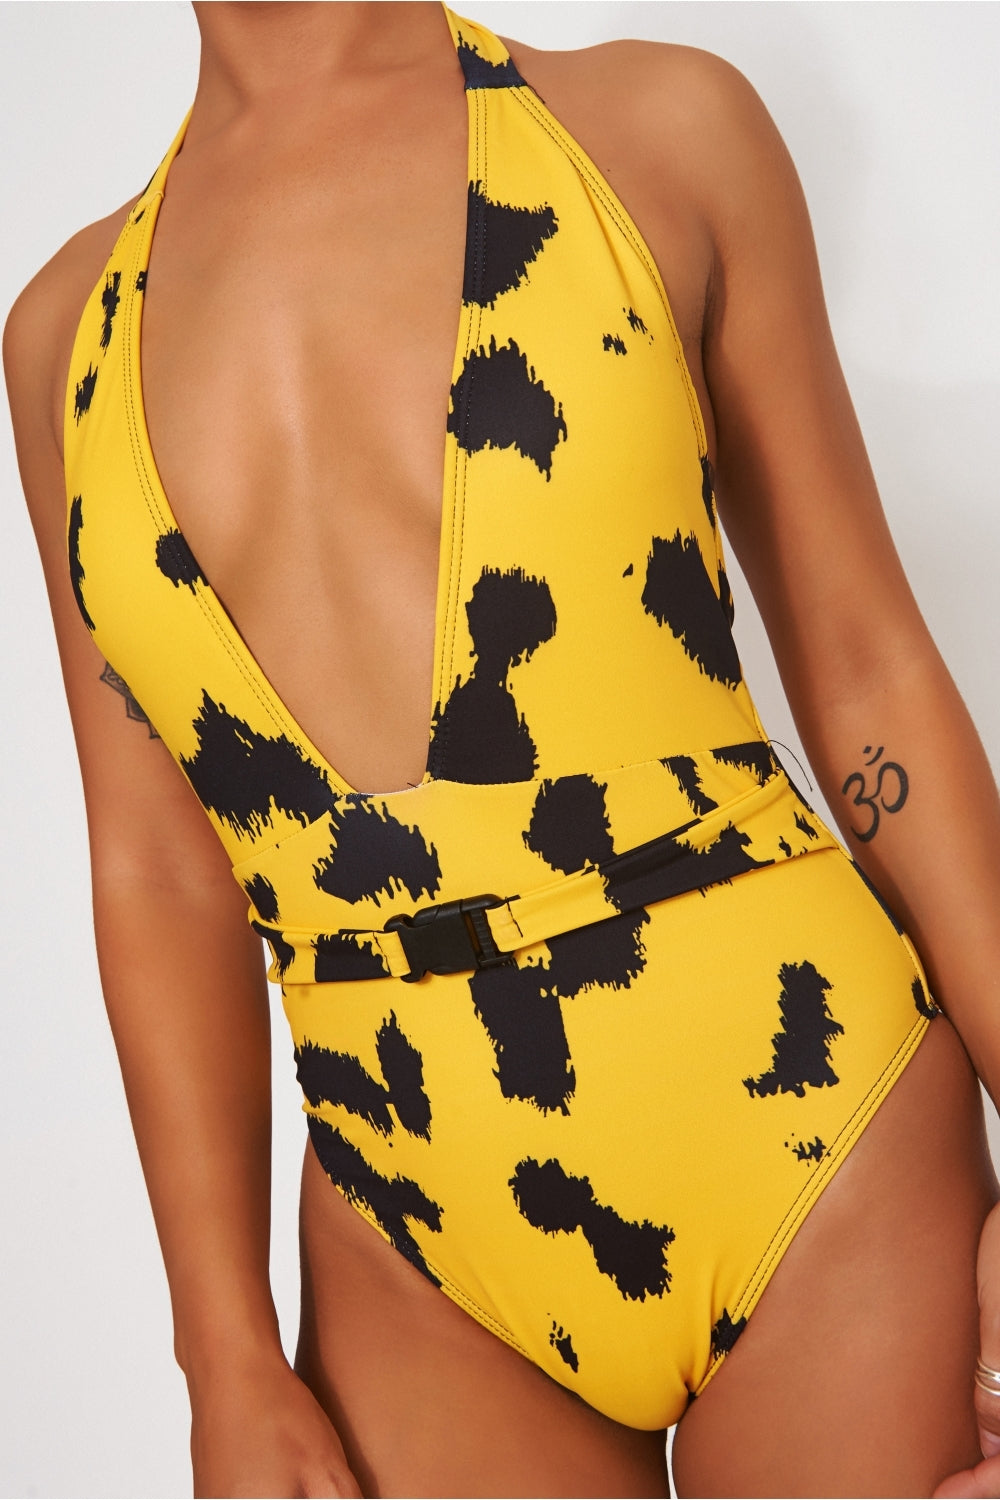 Yellow Dalmatian Print Swimsuit